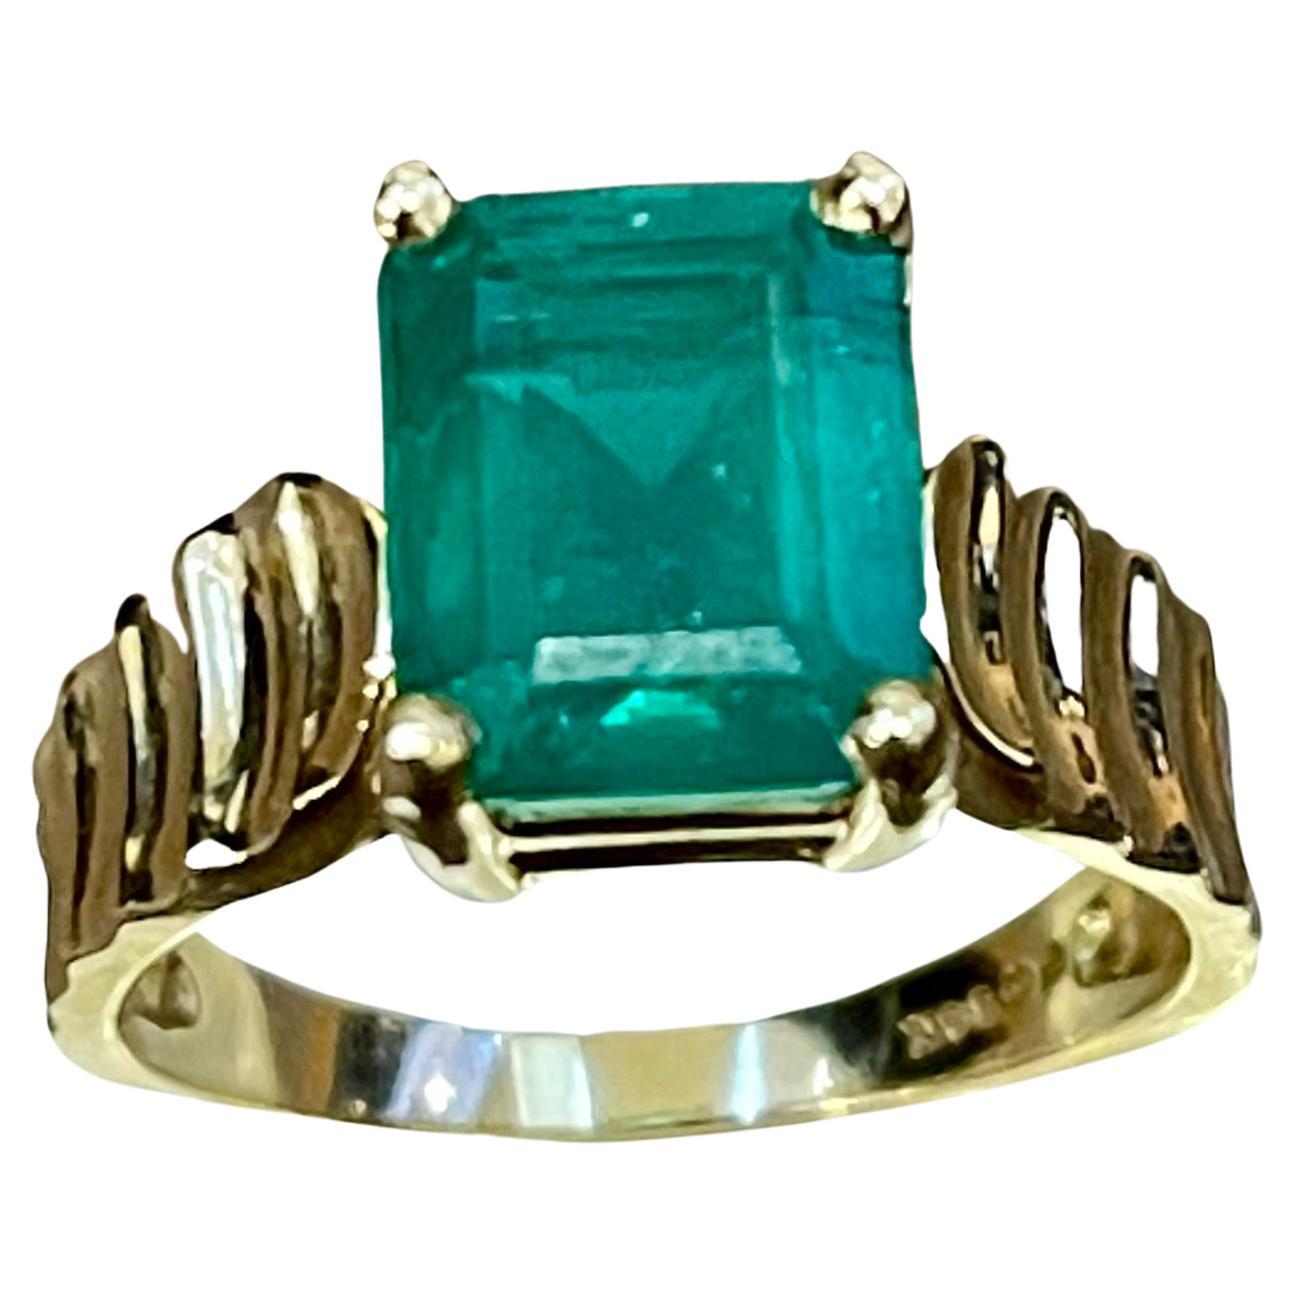 3.8 Carat Natural Zambian Emerald Cut Emerald Ring 14 Karat Yellow Gold